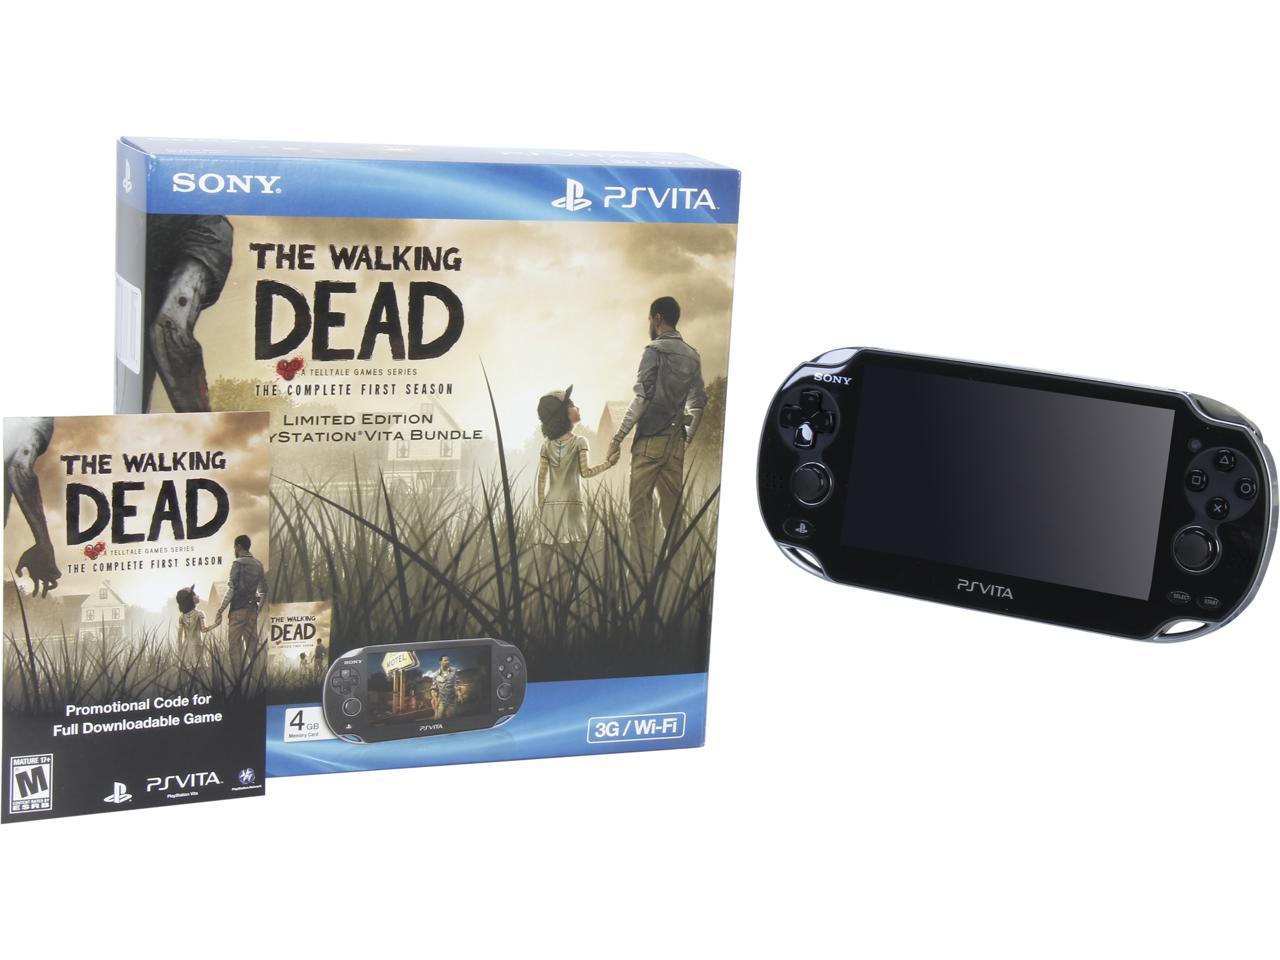 The Walking Dead PS Vita. Властелин колец PS Vita. PS Vita док станция купить. Dead ps vita